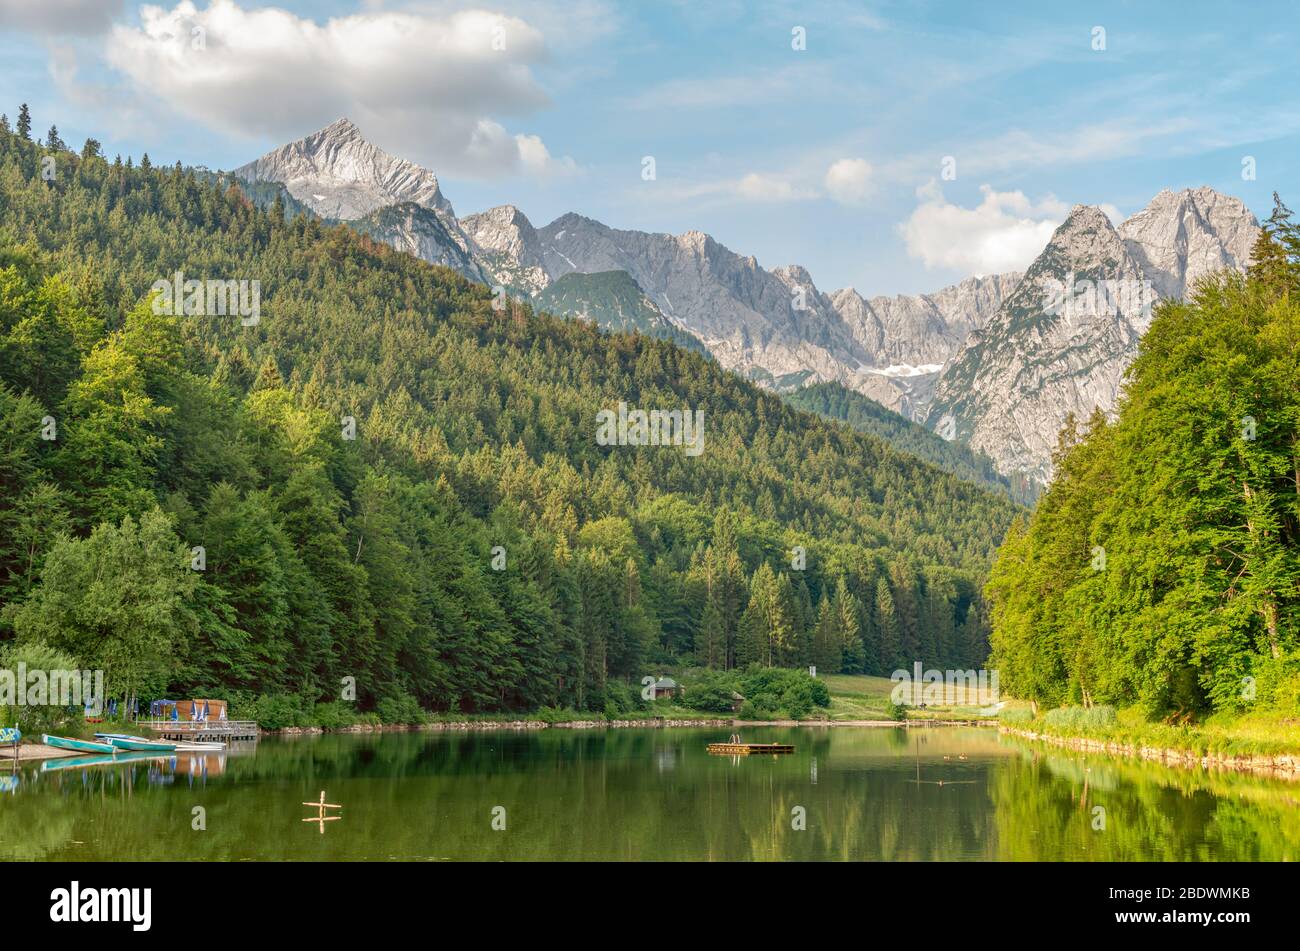 Landscape at the Riessersee with the Wettersteingebirge in the background, Garmisch Partenkirchen, Bavaria, Germany Stock Photo